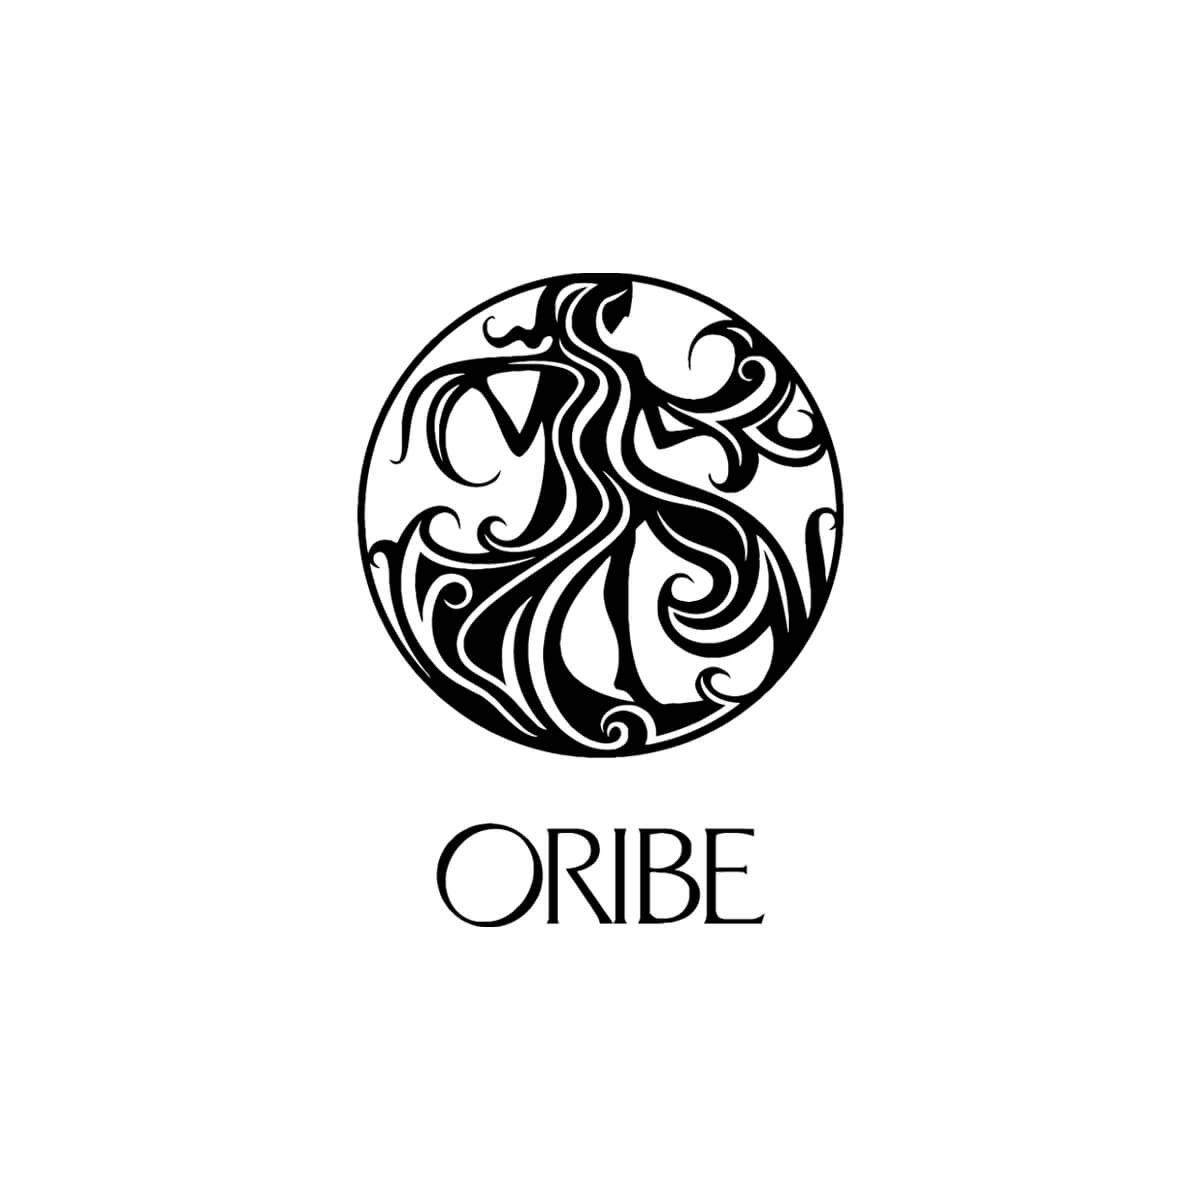 Hair product Oribe logo